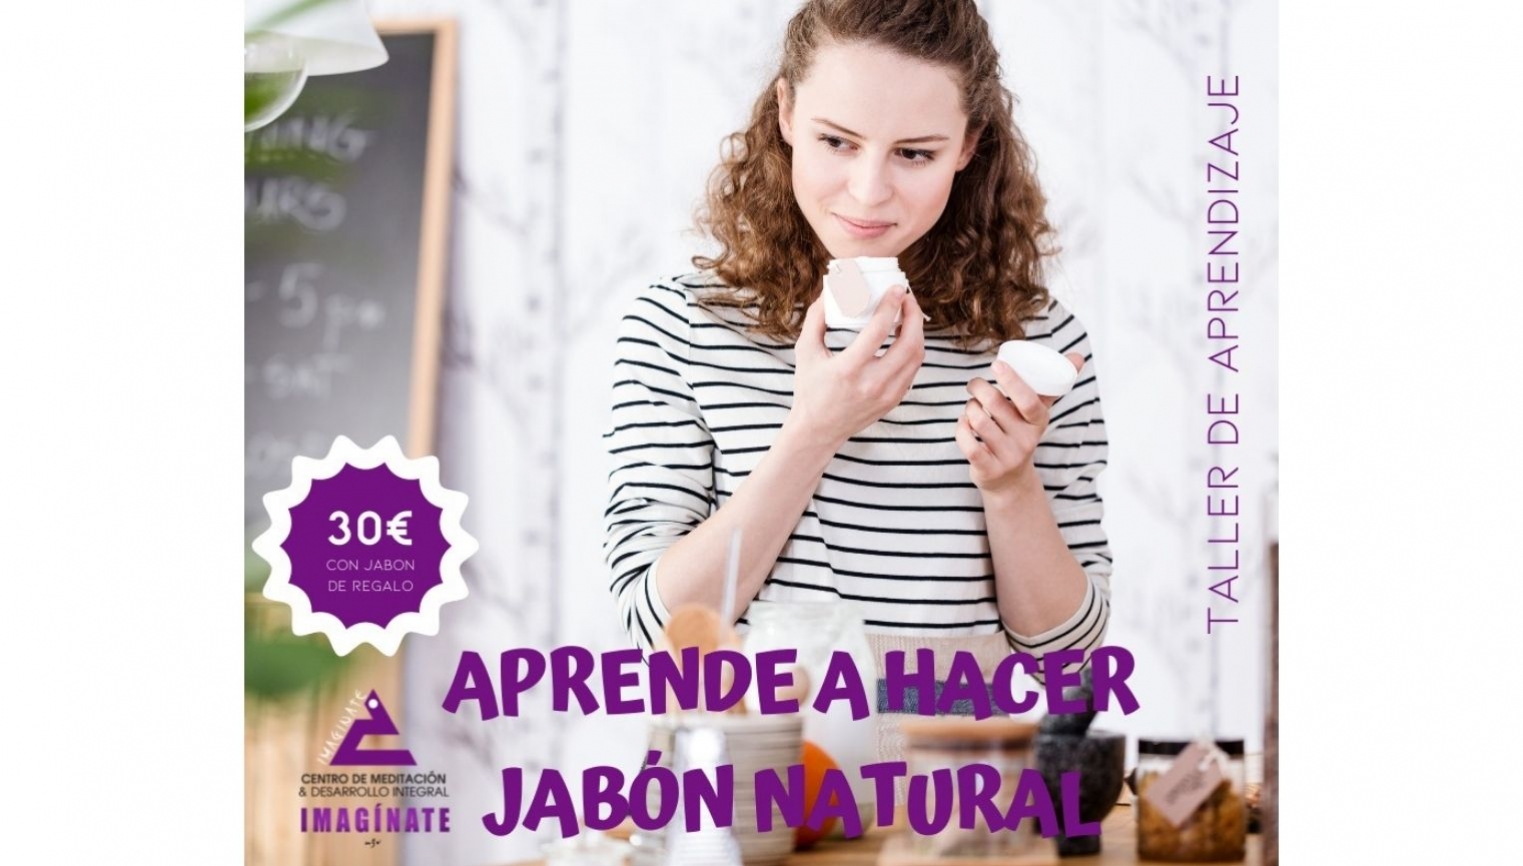 Aprende a Hacer Jabón artesanal natural 30€ con jabón de regalo - foto 2/6